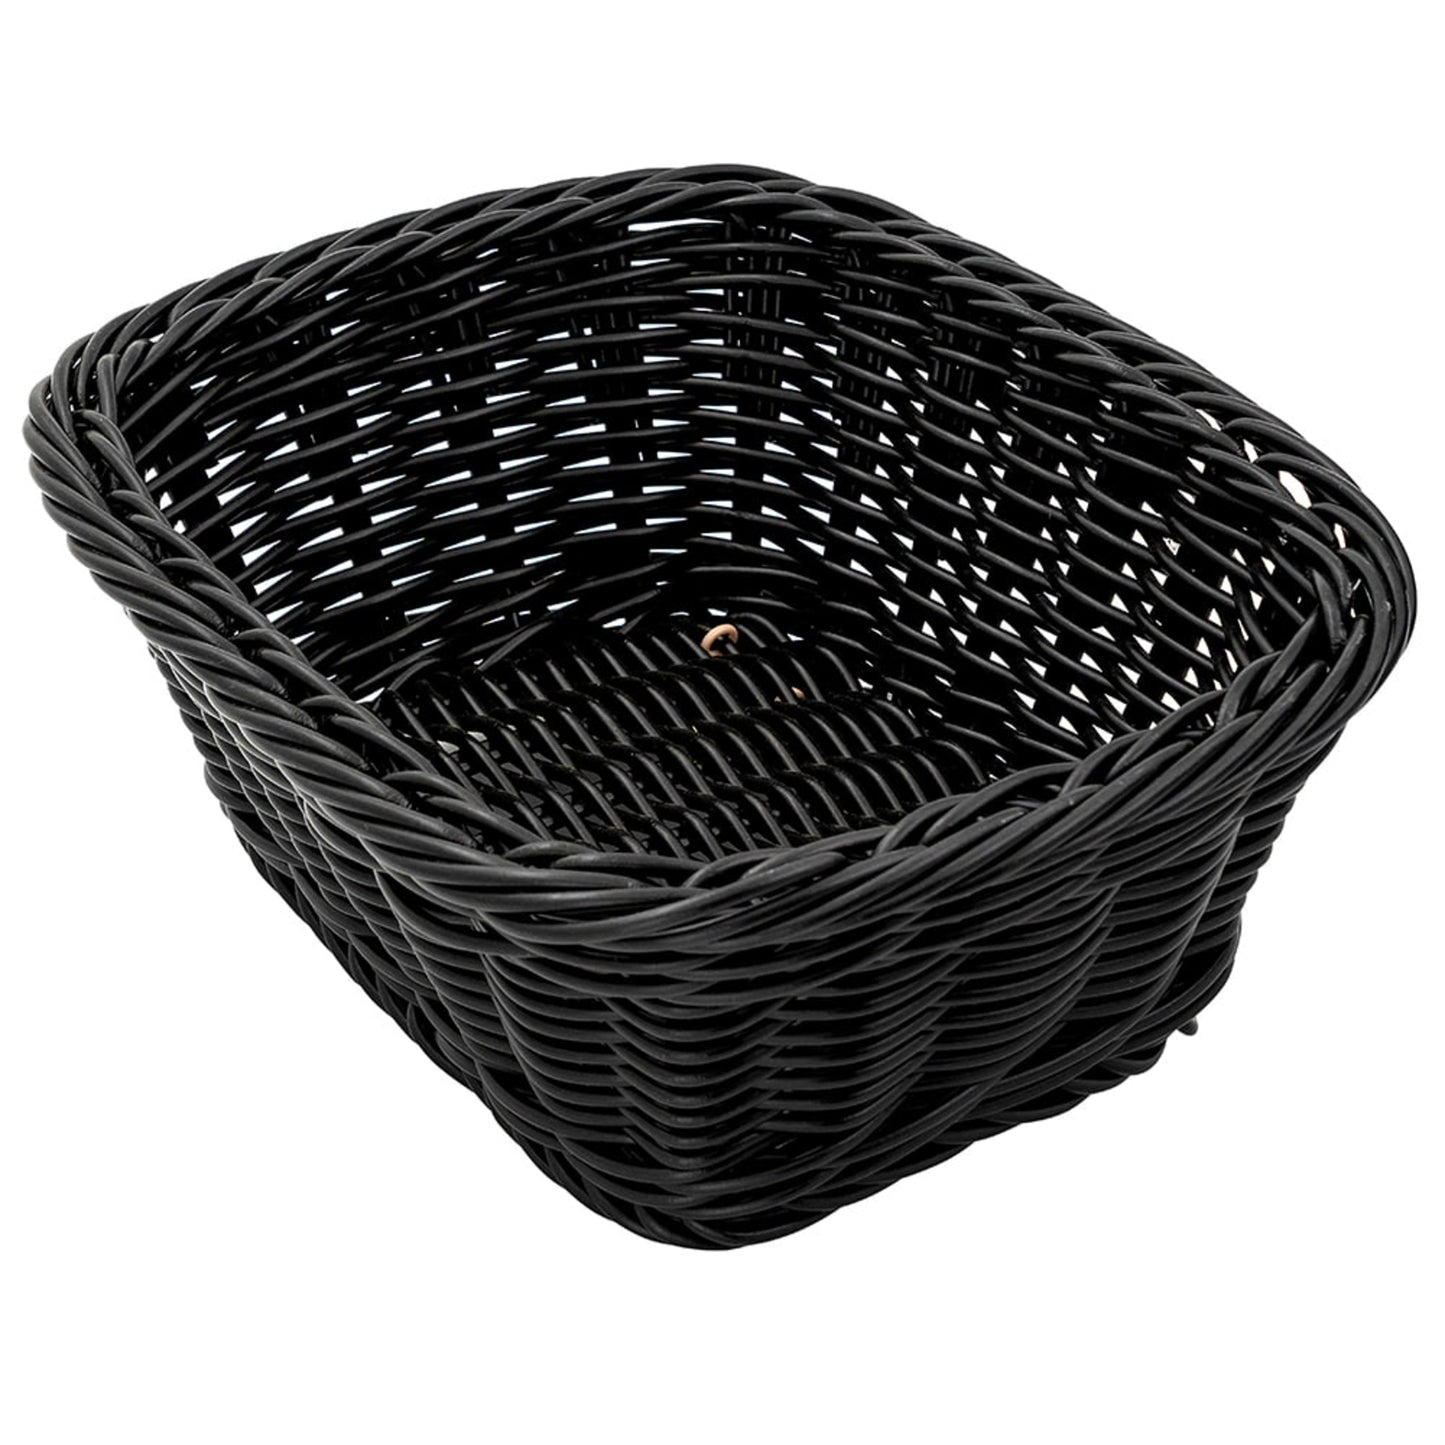 9.5" x 7.75" Rectangular Basket, 3.5" Deep